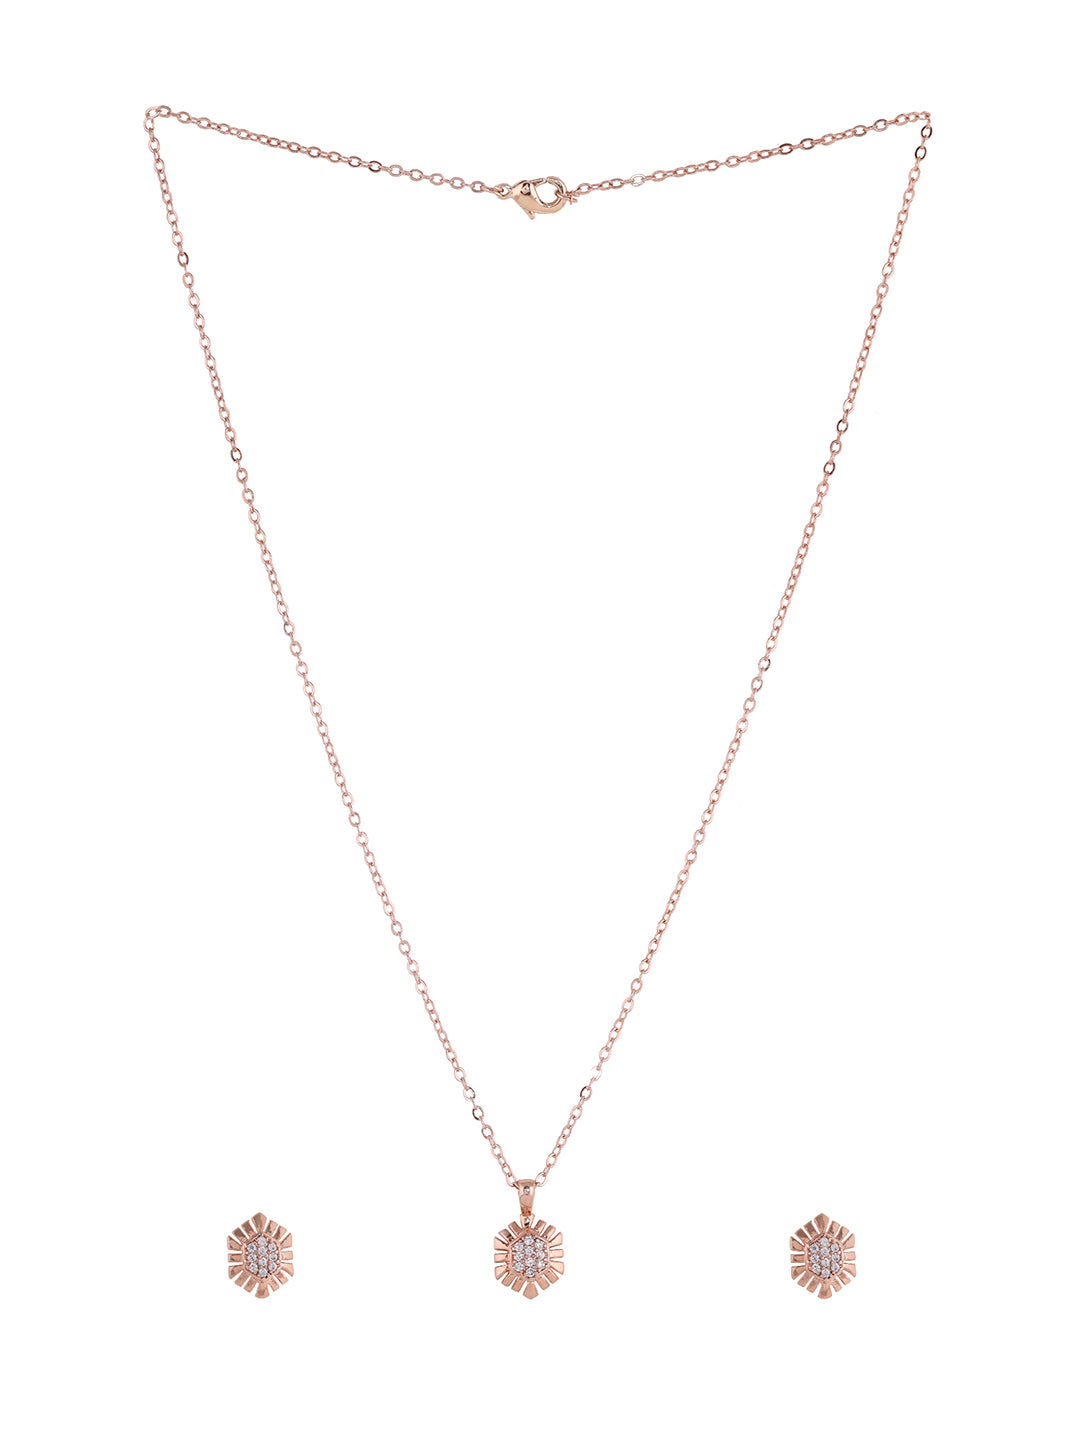 Prita American Diamond Valentine's Necklace